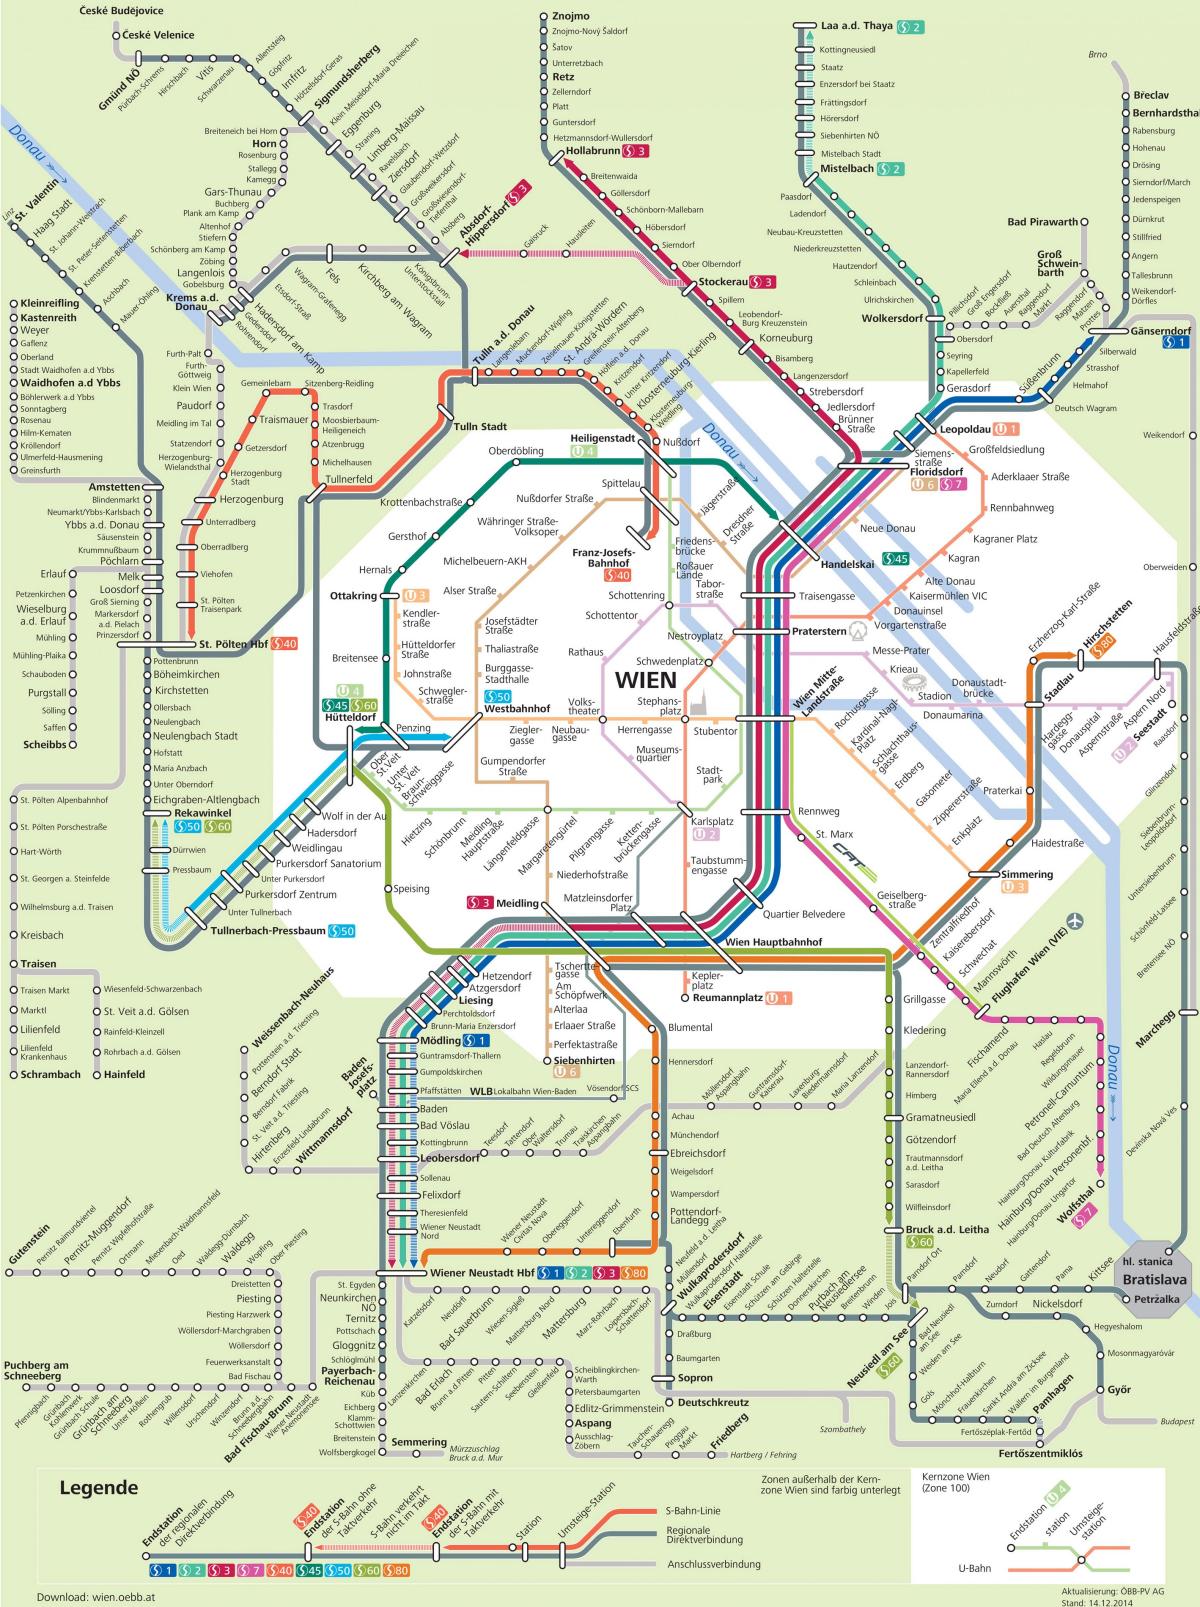 Mapu Viedne s7 trasy